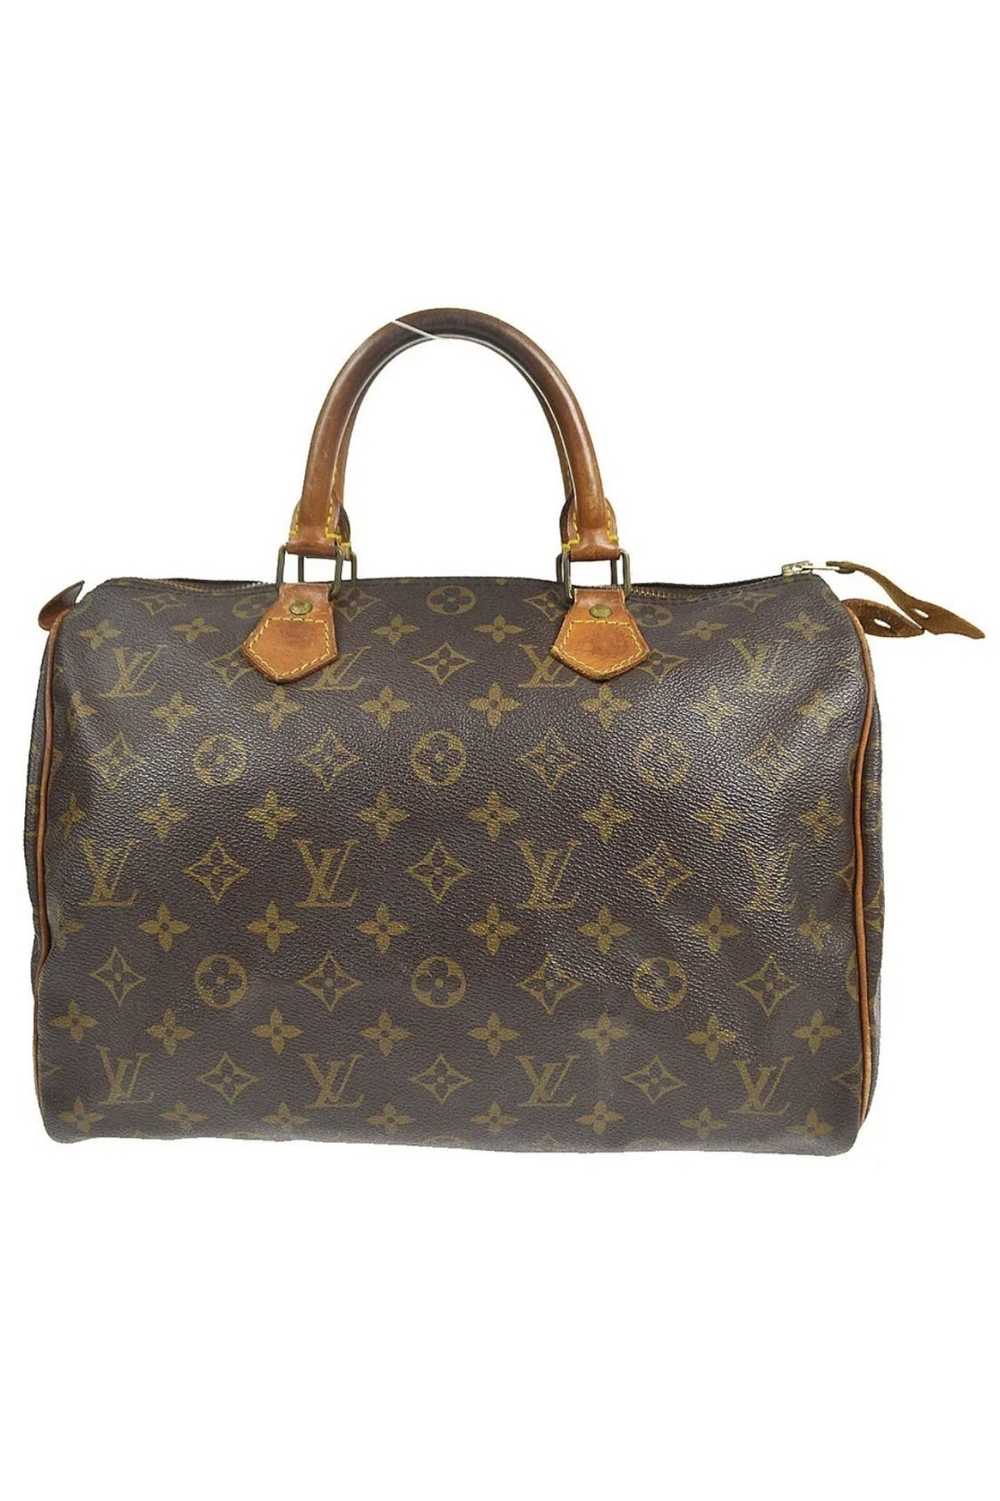 Louis Vuitton Speedy 30 Duffle Bag - image 1